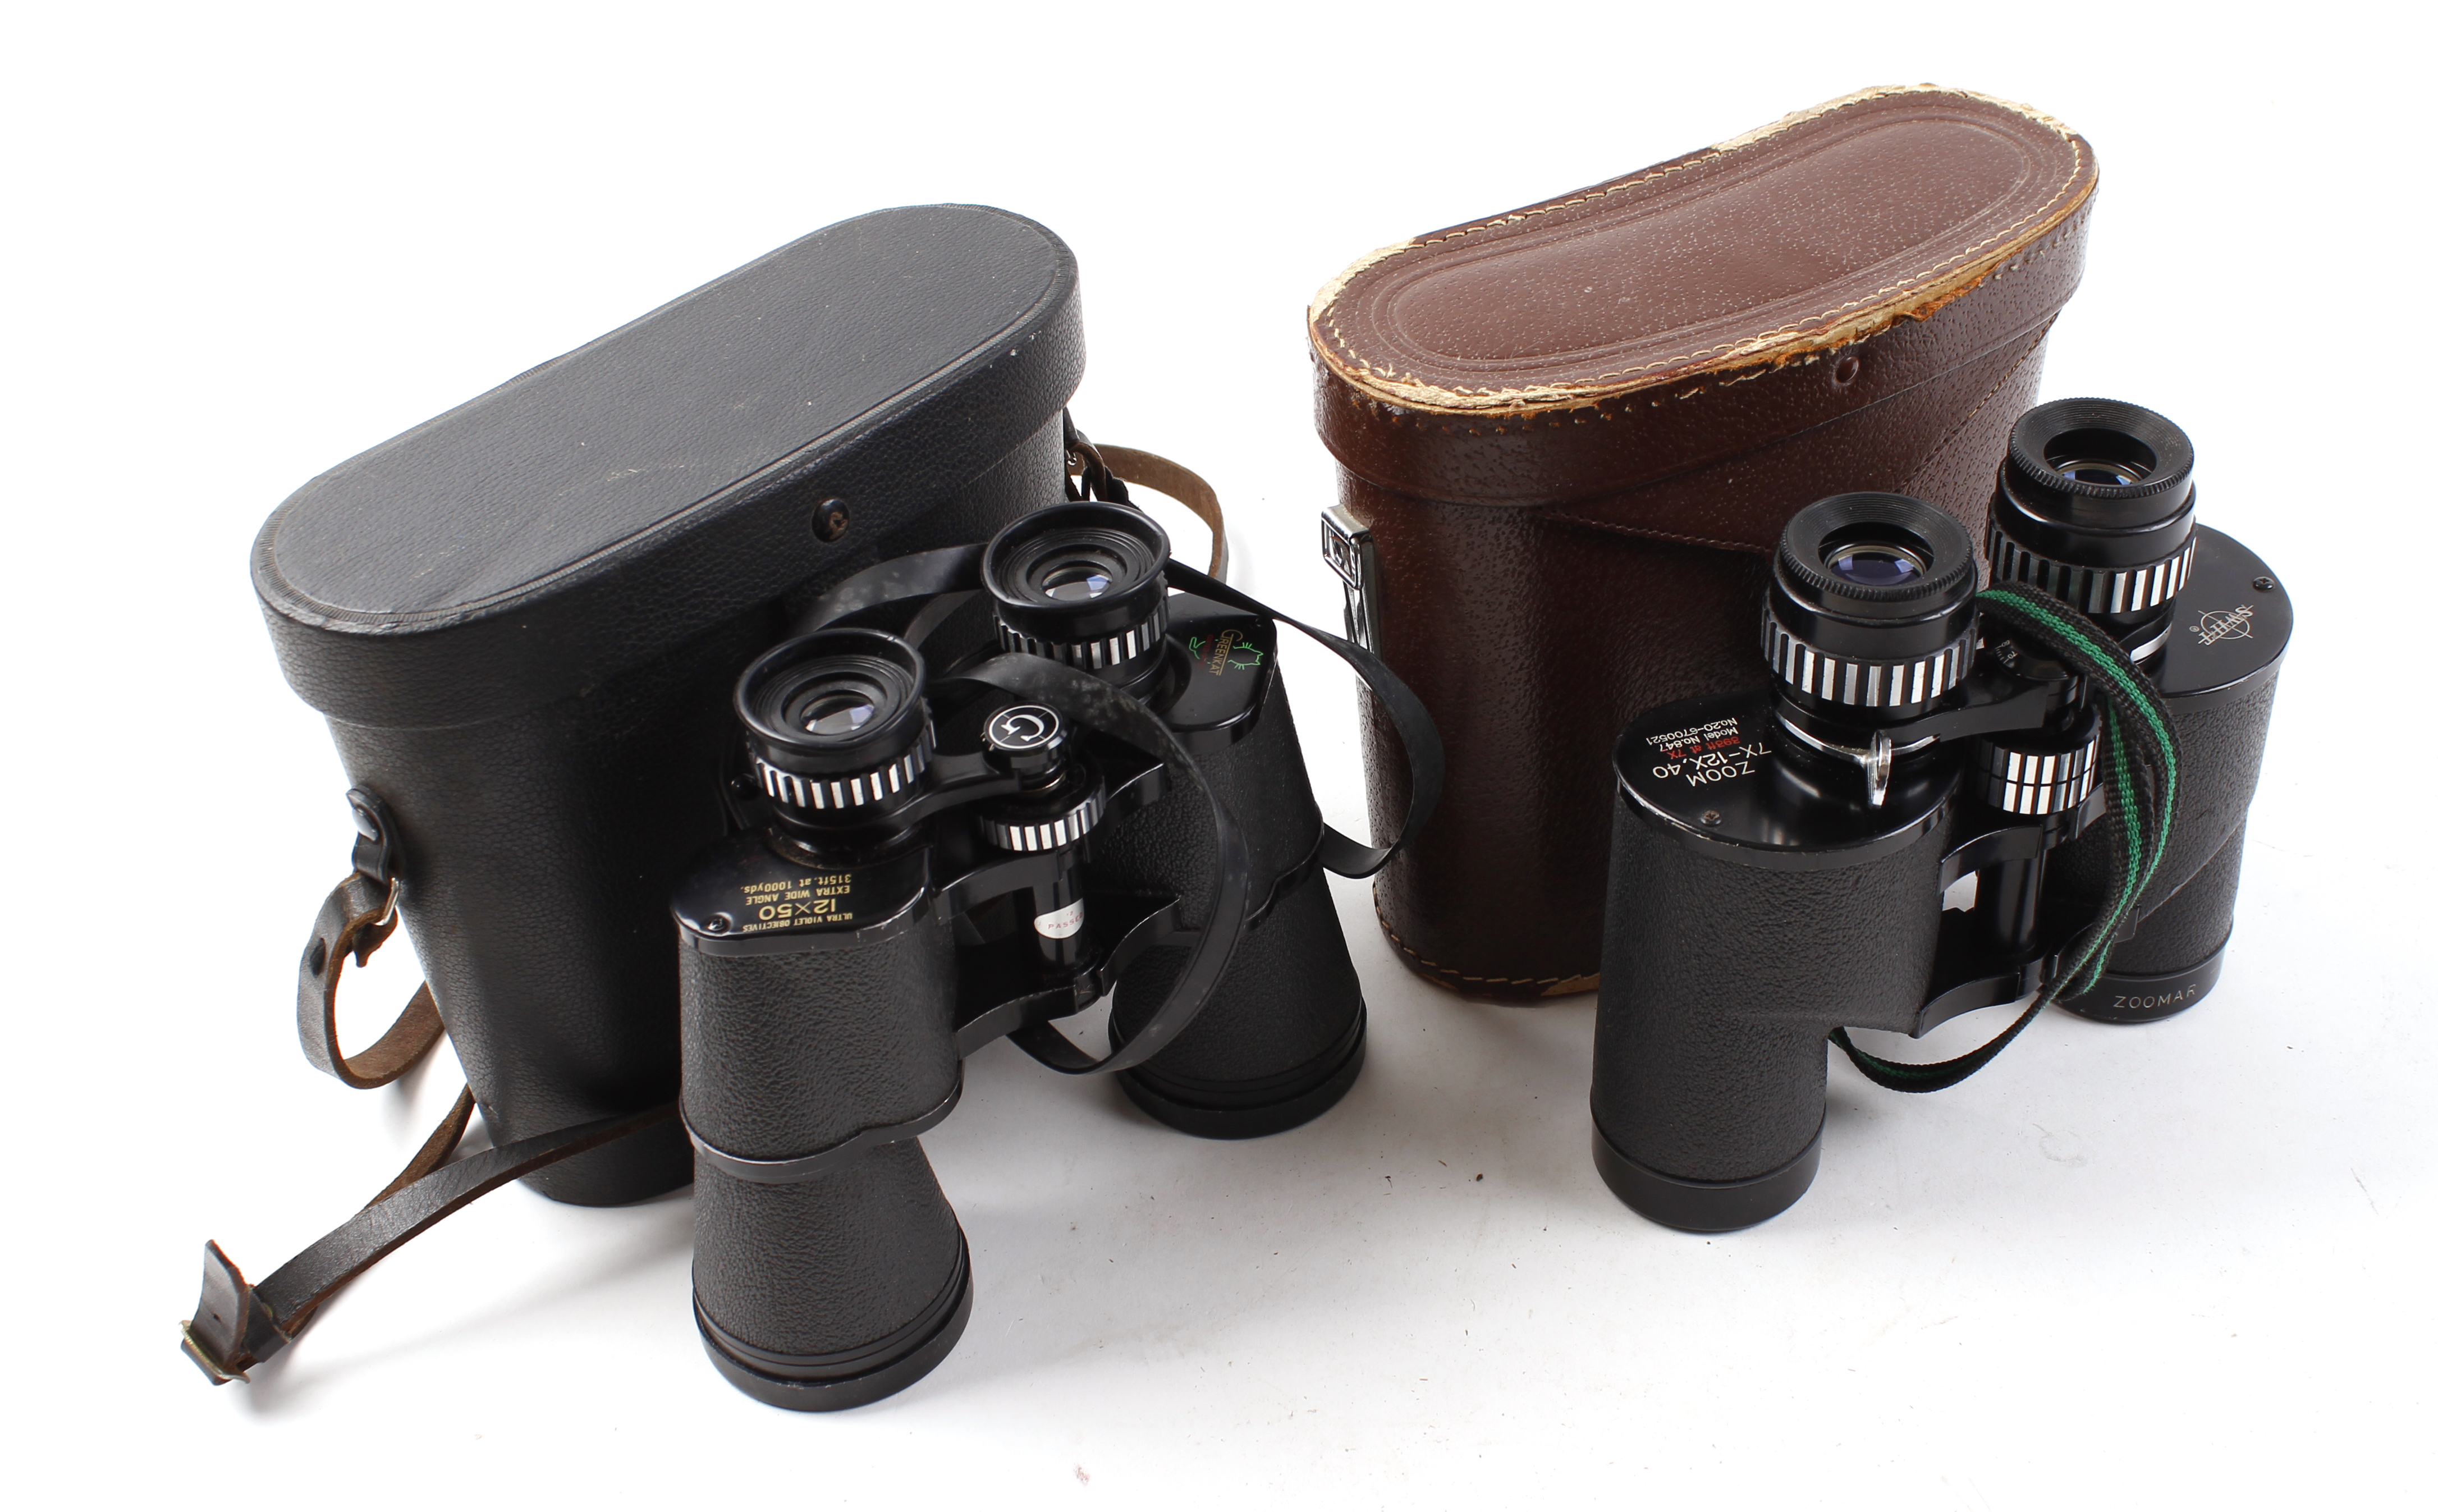 7-12 x 40 Swift Model 847 binoculars, cased; 12 x 50 Greenkat binoculars, cased (2)